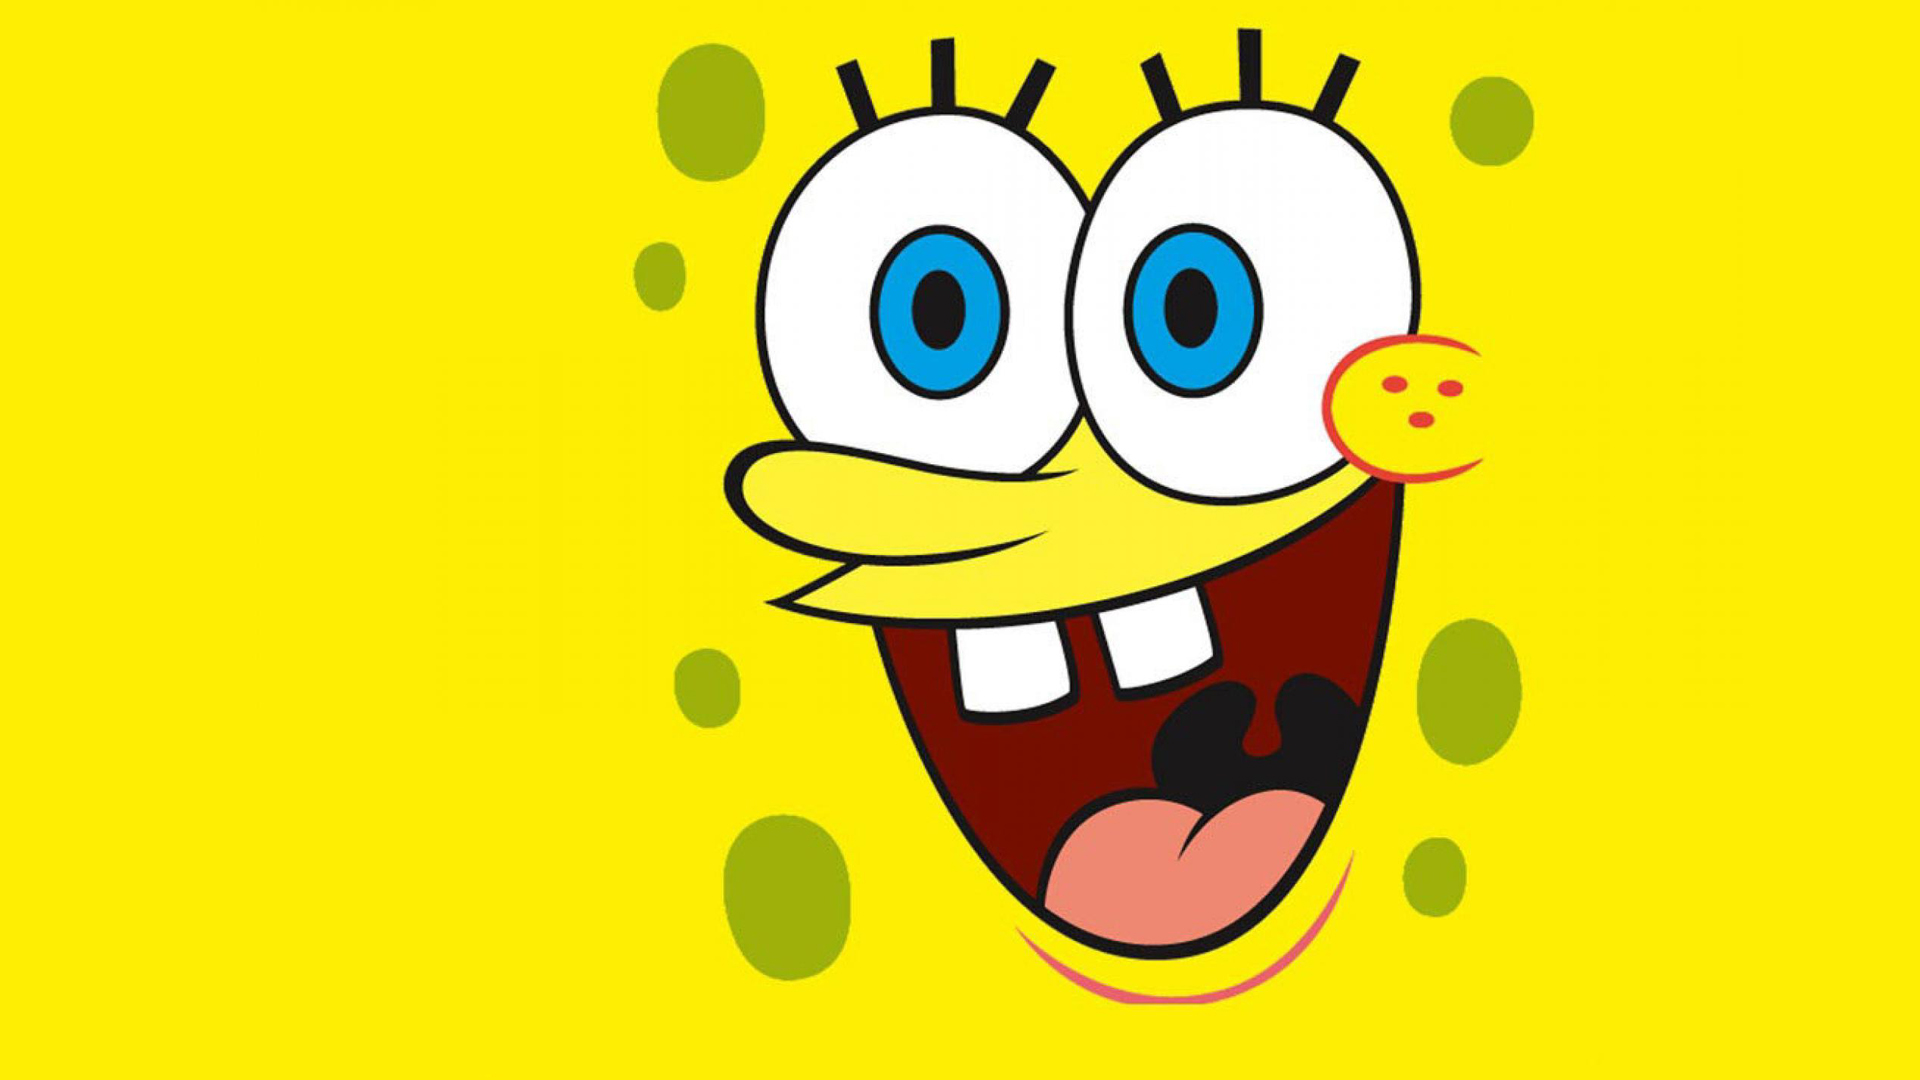 Free Download Spongebob Squarepants Wallpaper Hd Wallpaper 19x1080 For Your Desktop Mobile Tablet Explore 75 Spongebob Squarepants Backgrounds Hd Spongebob Wallpaper